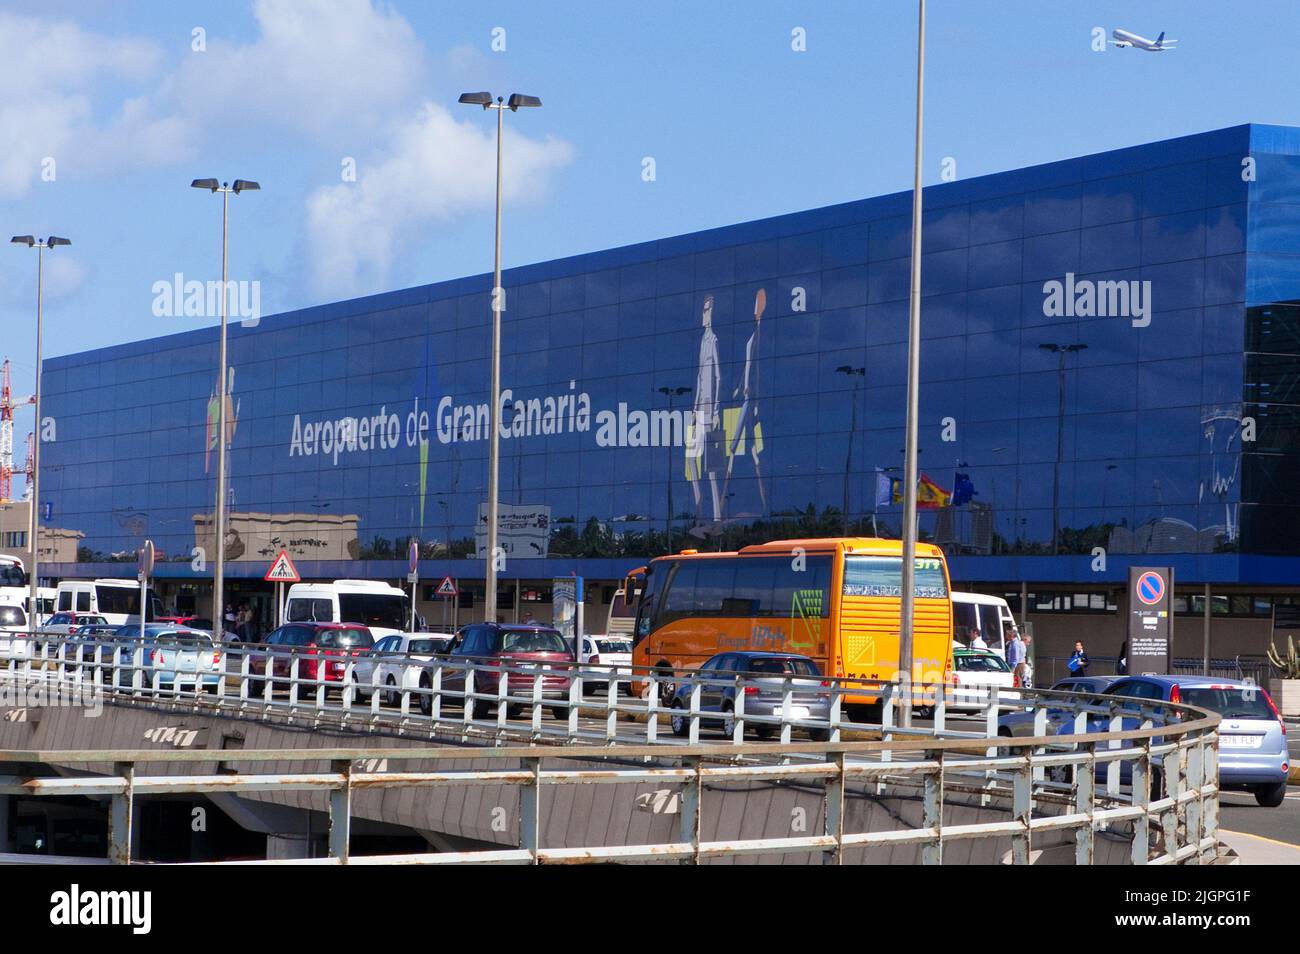 Aéroport de Gran Canaria, Grand Canary, îles Canaries, Espagne, Europe Banque D'Images